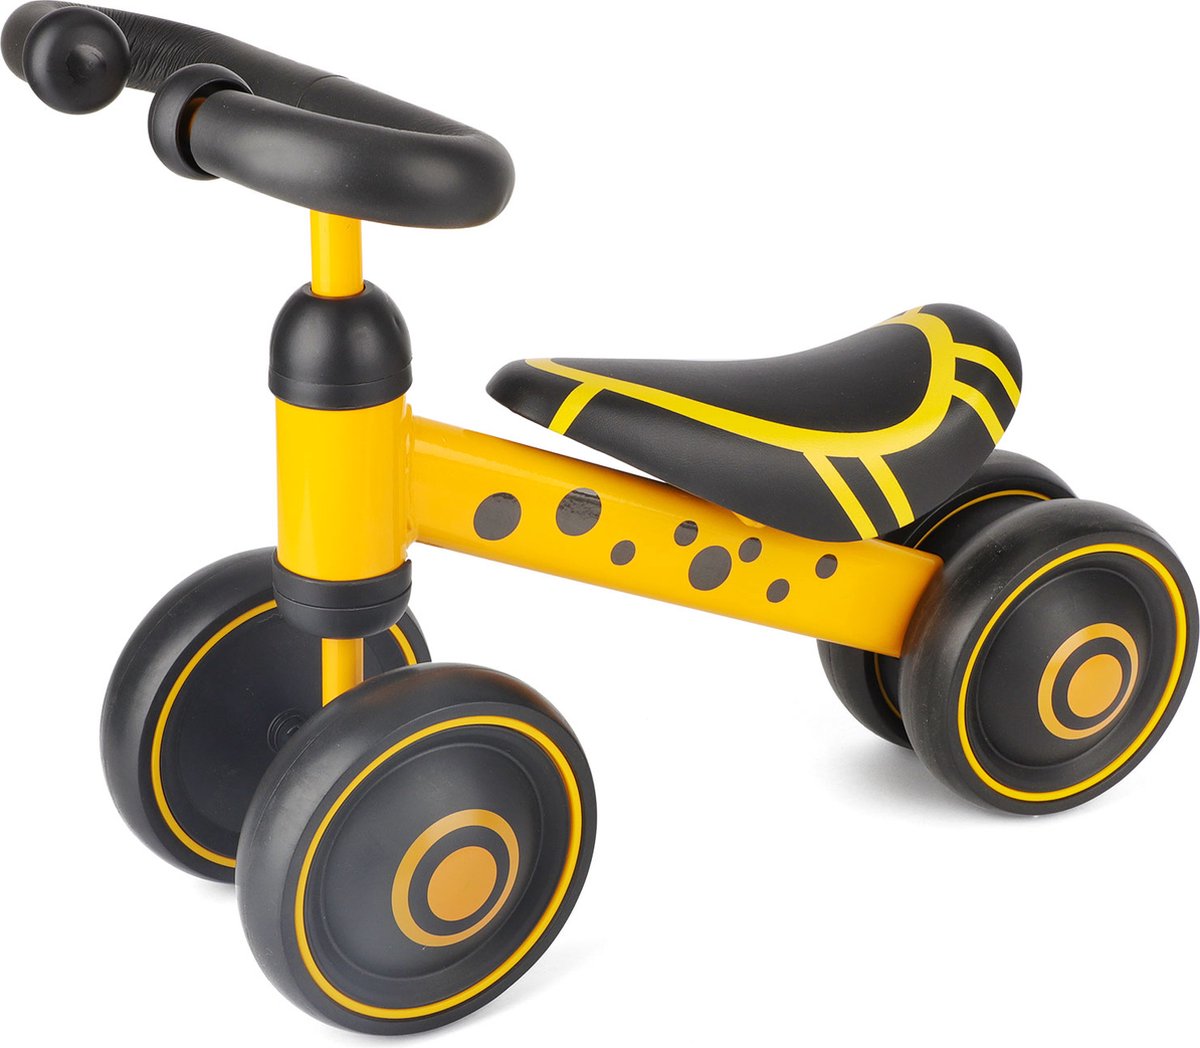 Little Bee Roller Car - Balance Car - Kinderfiets - 2 jaar oud, 3 jaar oud, 4 jaar oud jongens en meisjes speelgoed - verjaardagscadeau